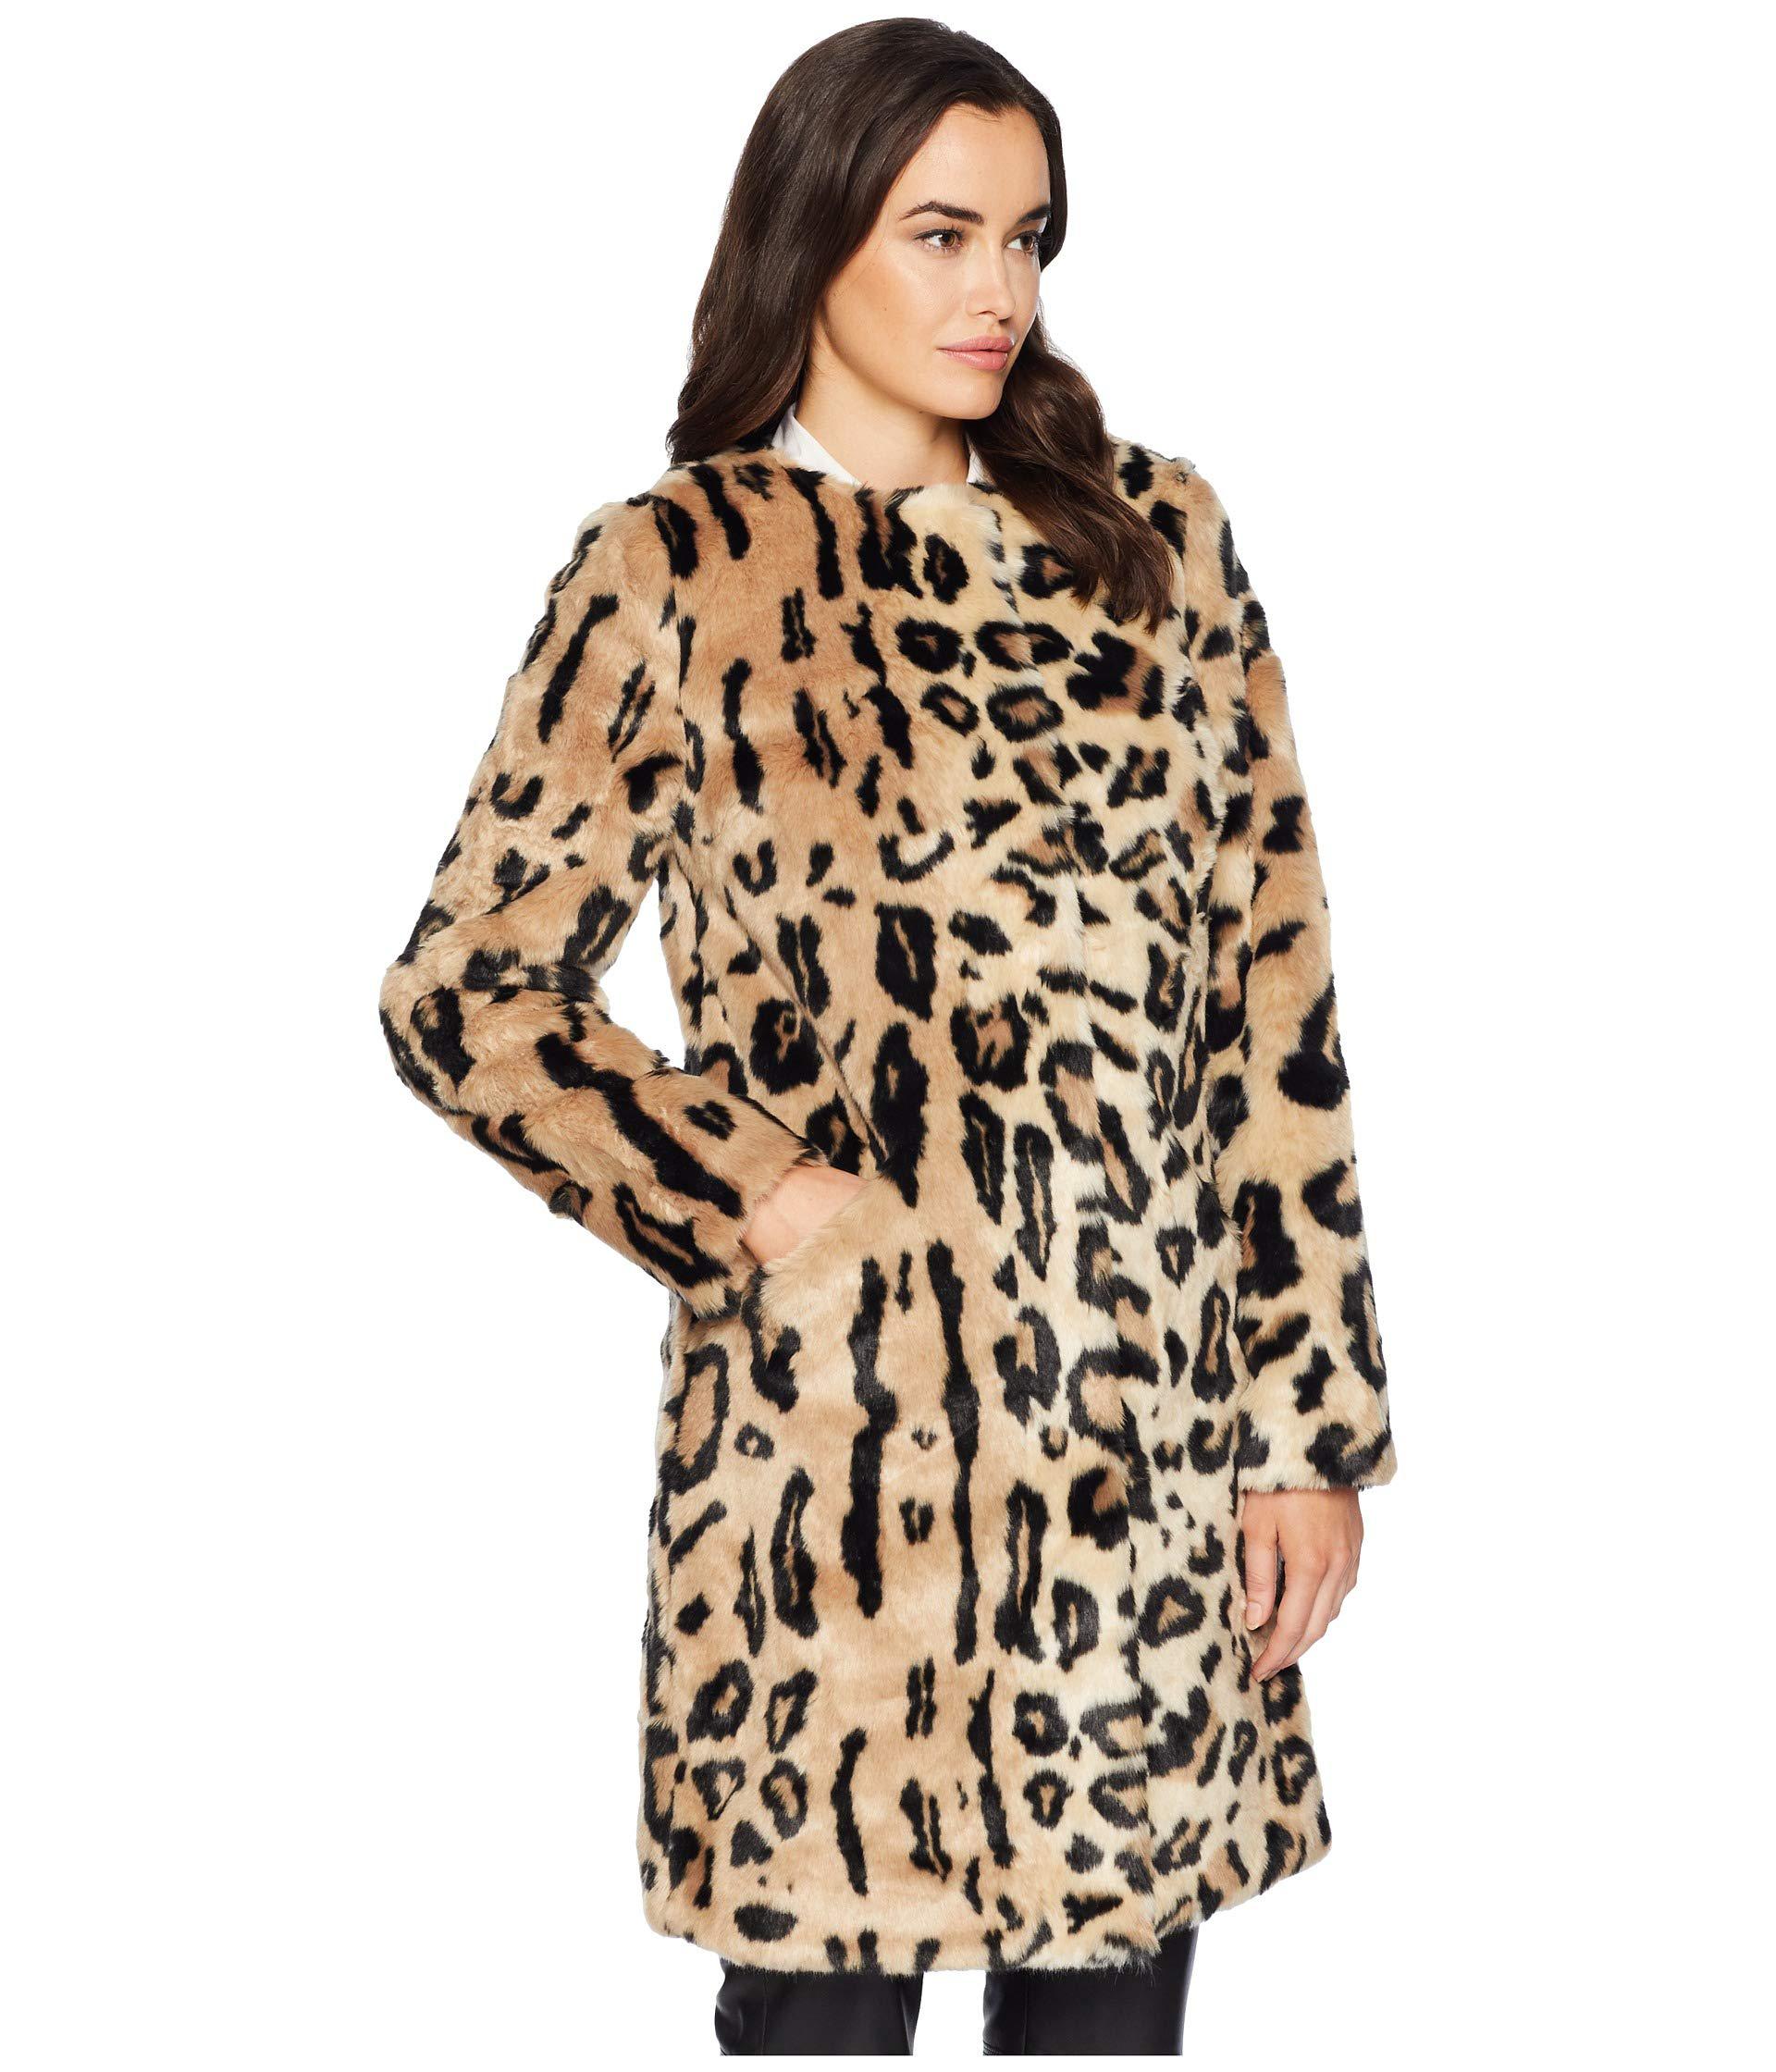 ugg leopard coat